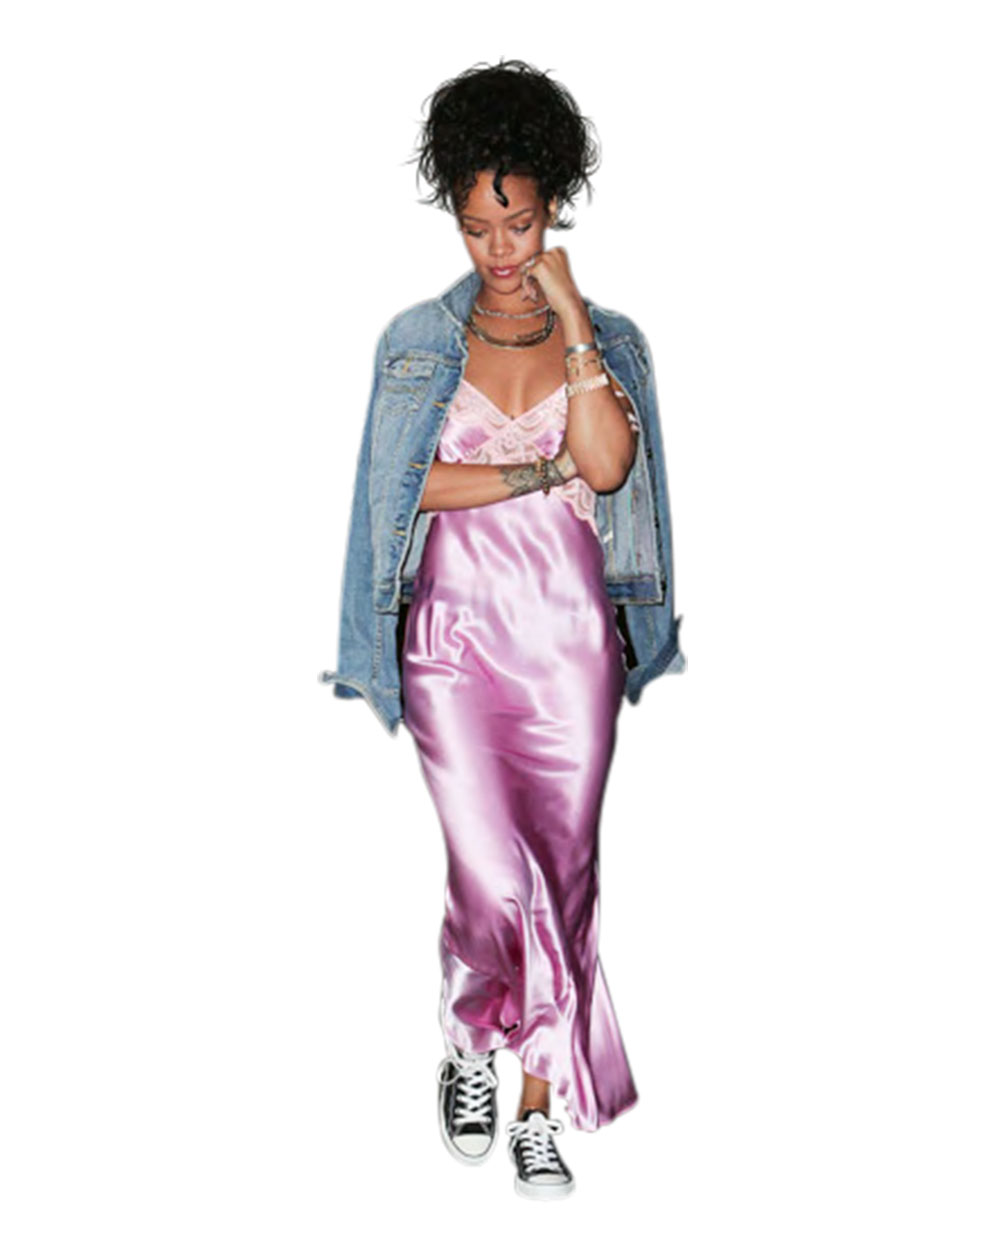 Rihanna - Slip dresses